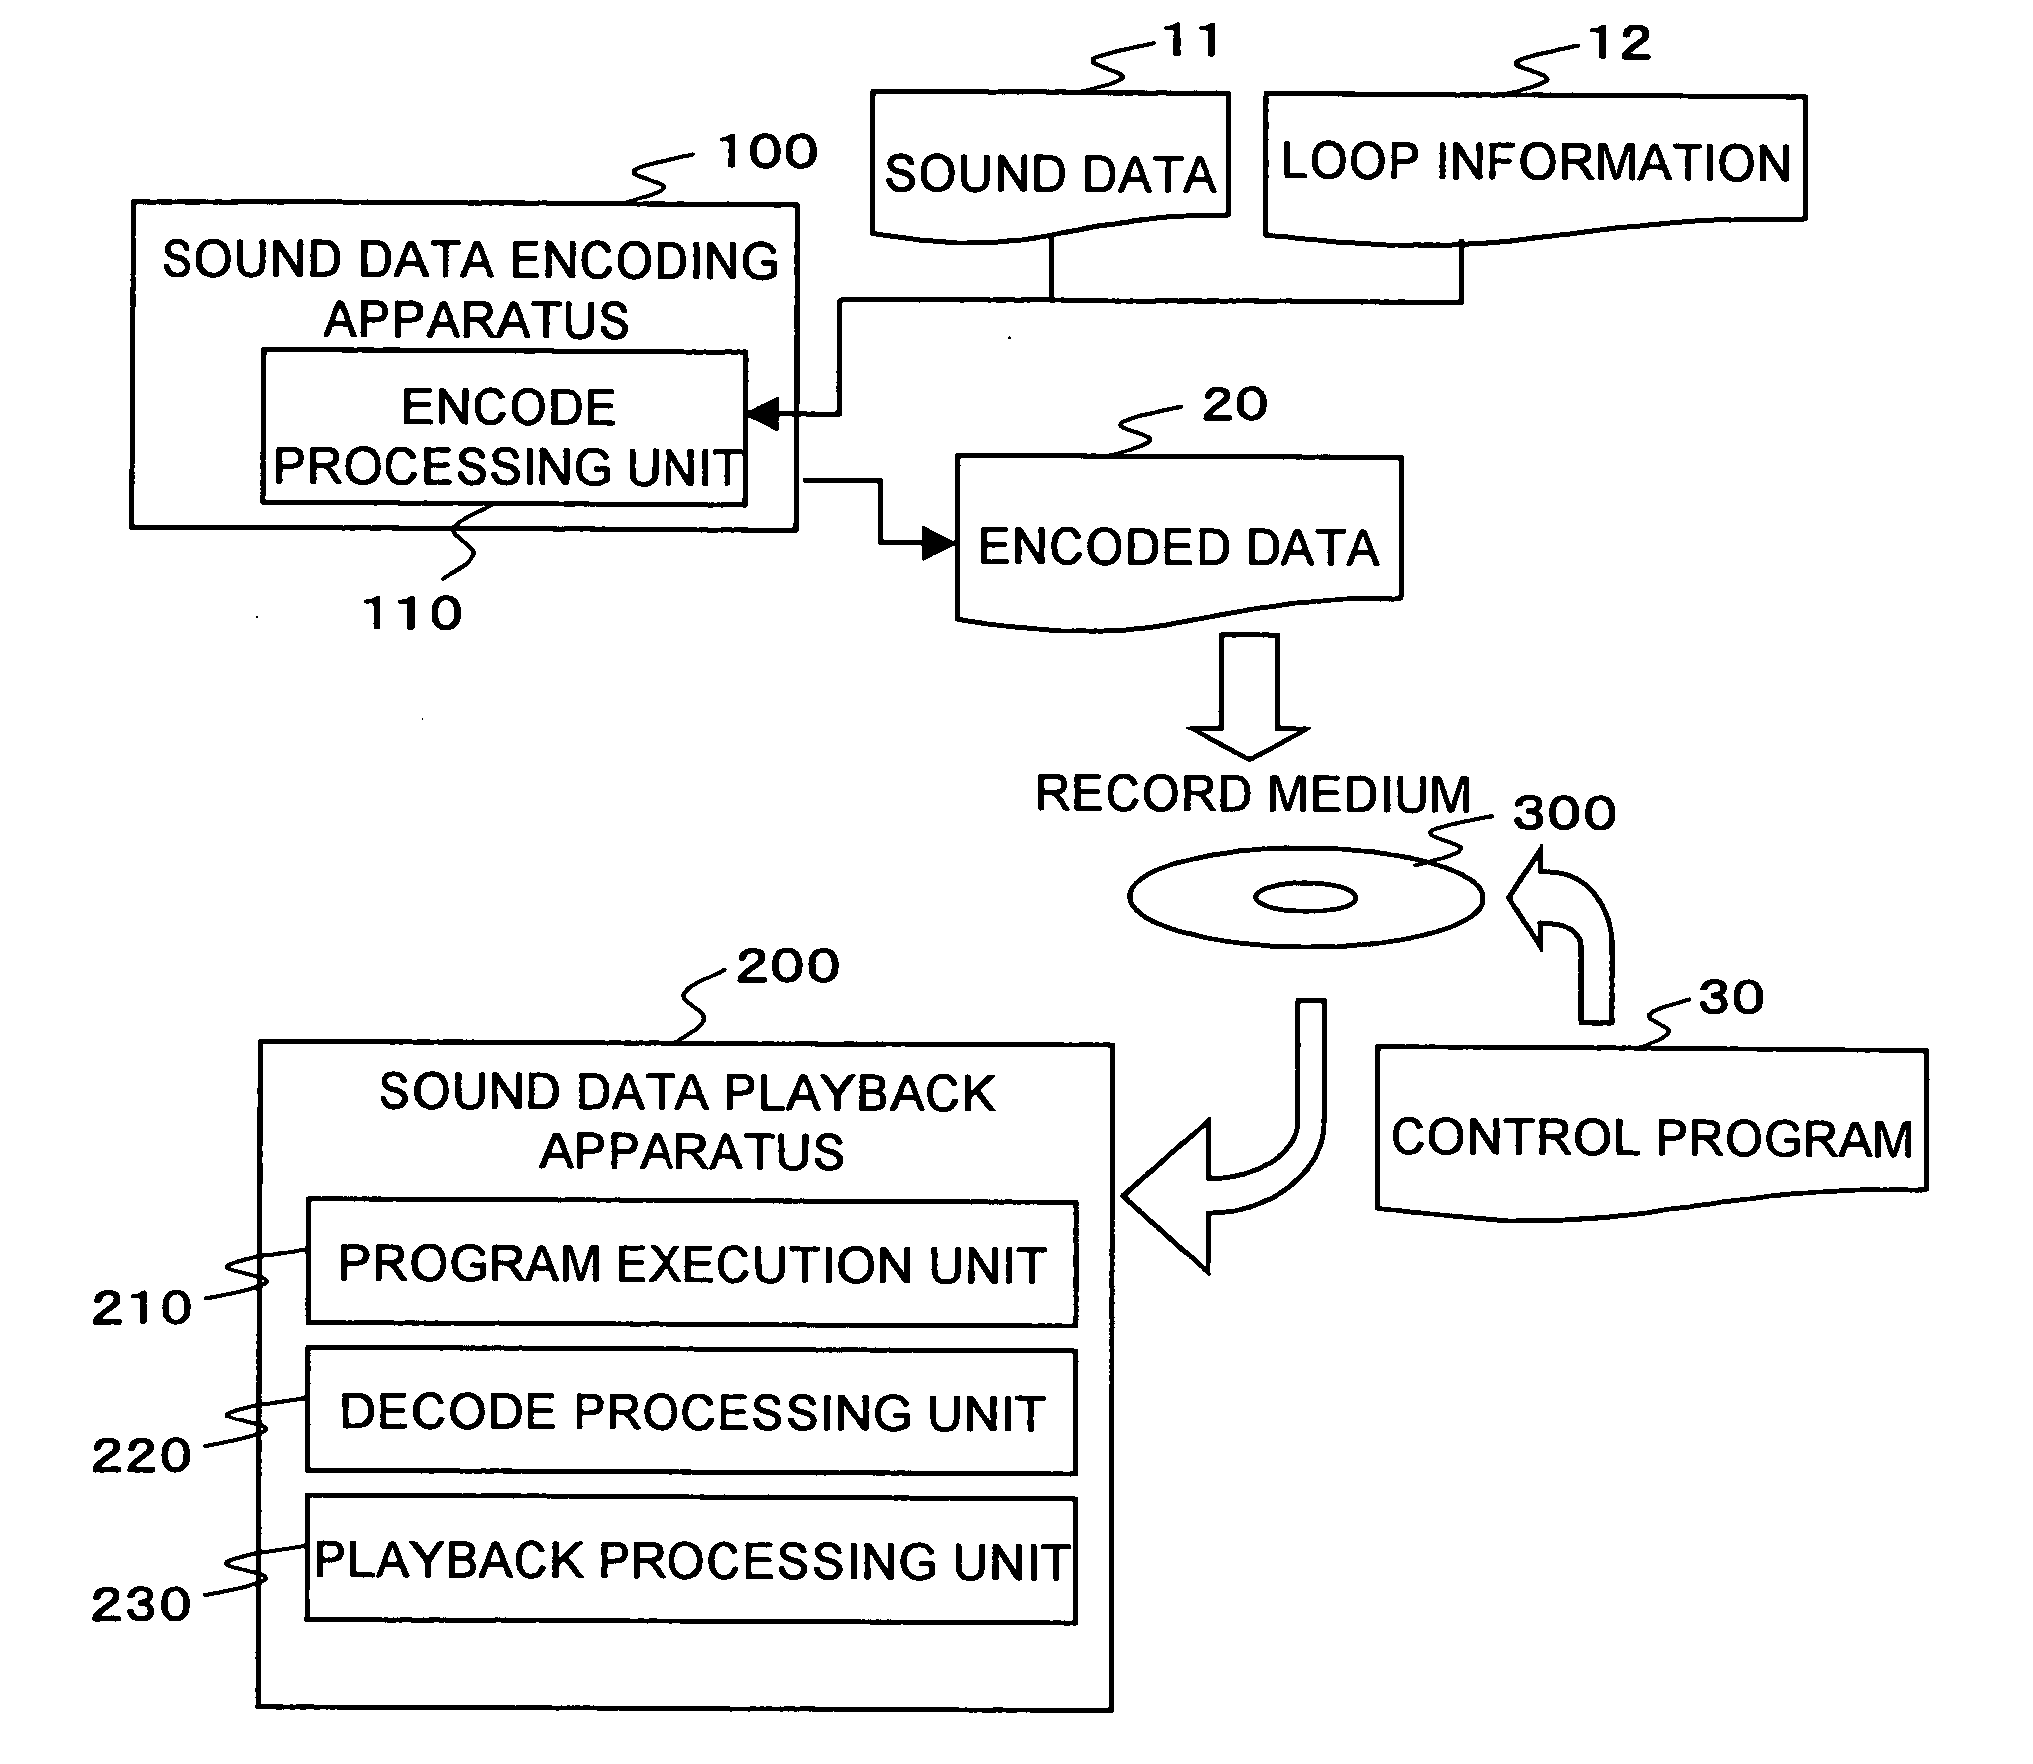 Sound data encoding apparatus and sound data decoding apparatus